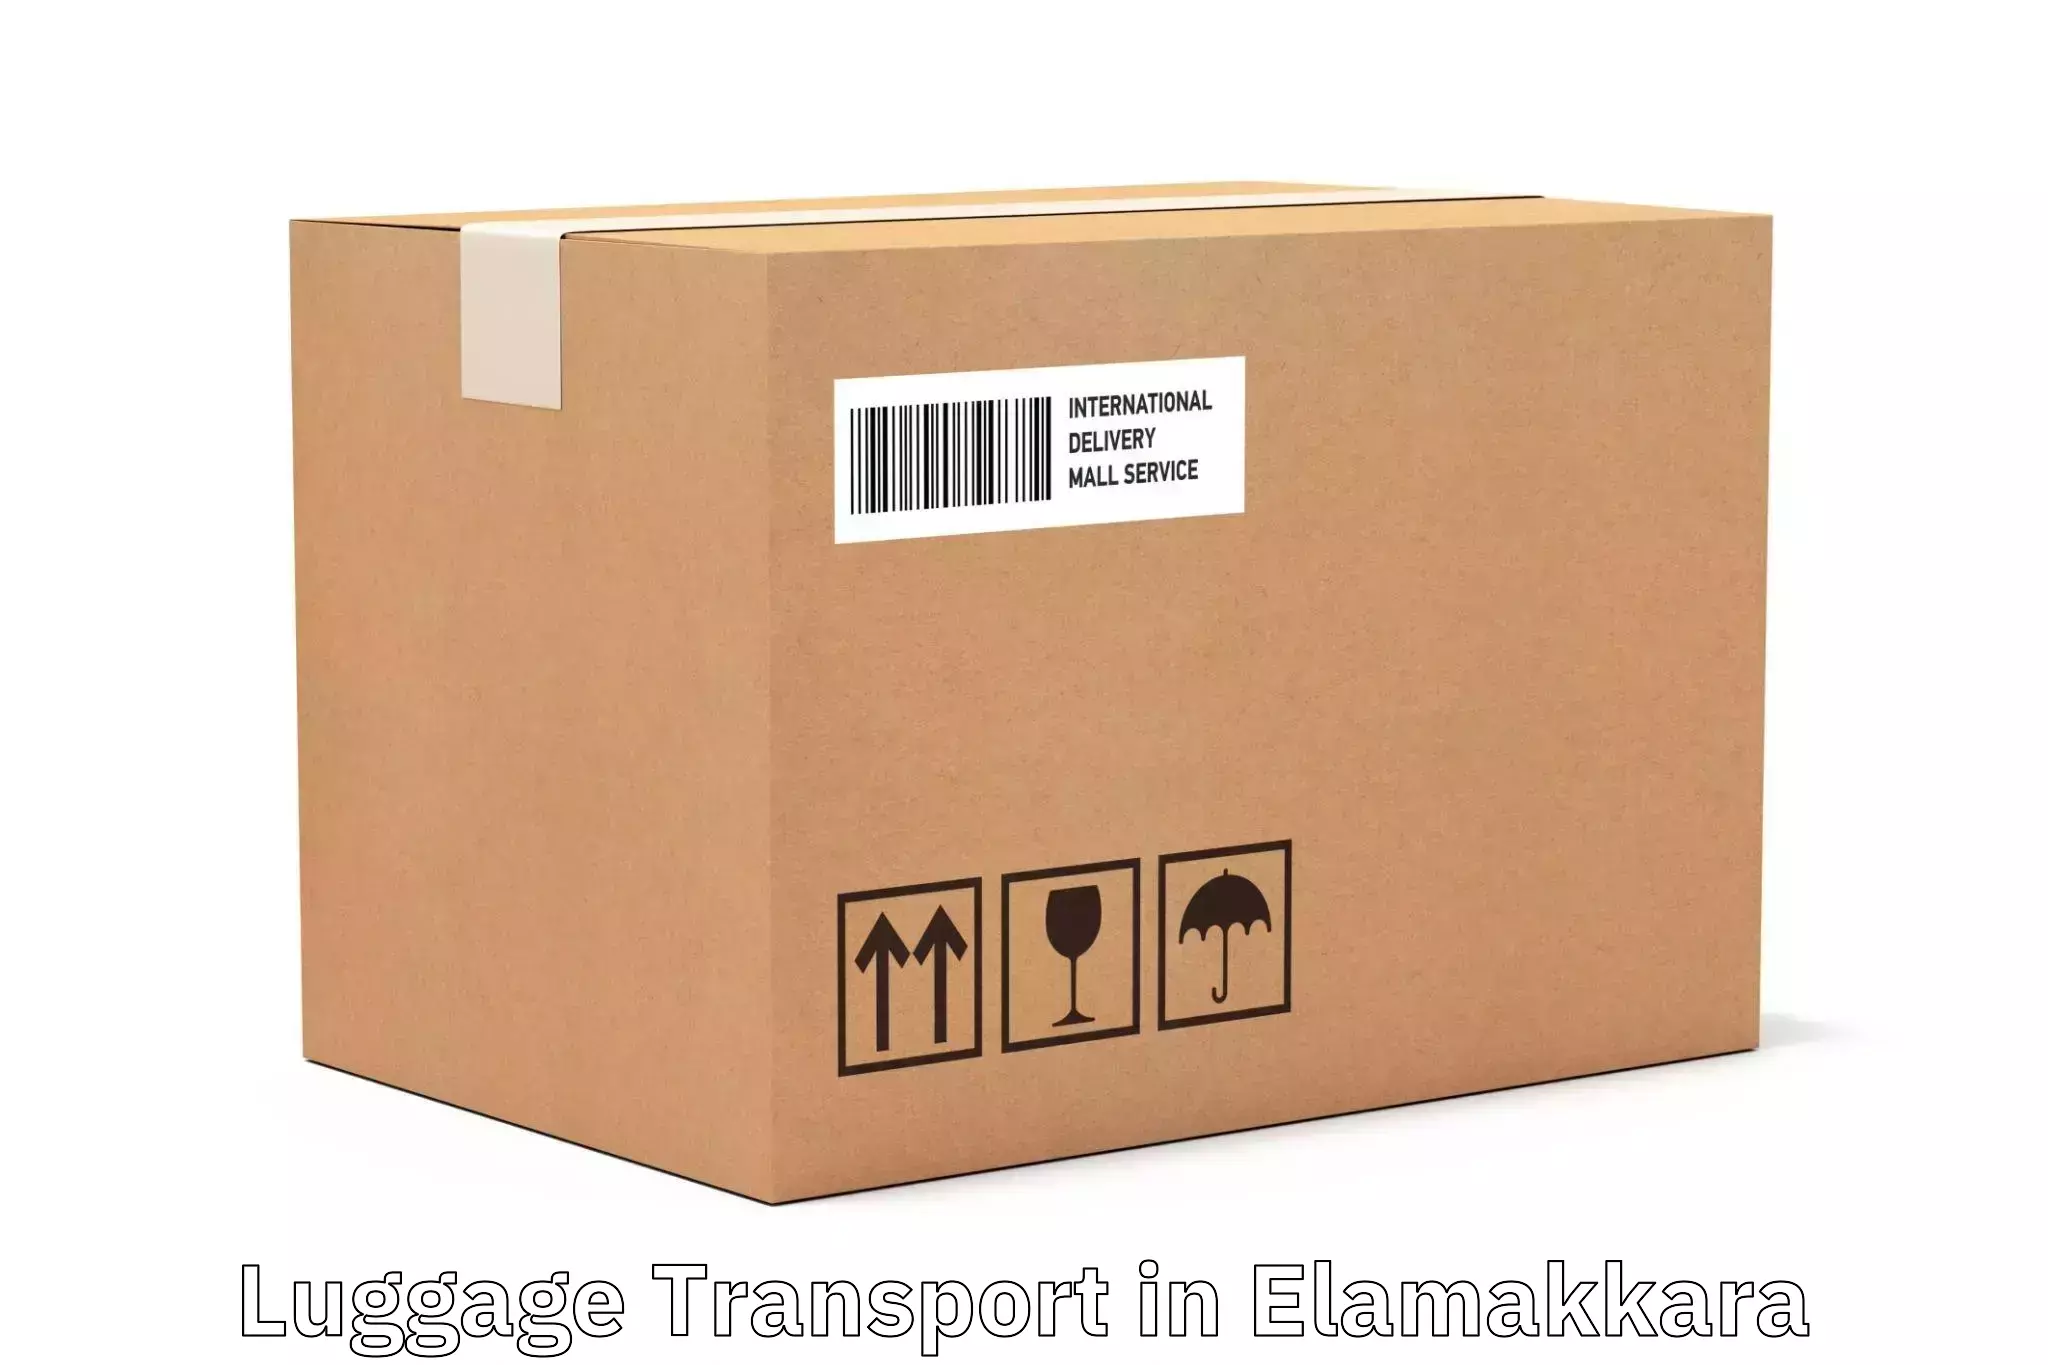 Baggage transport logistics in Elamakkara